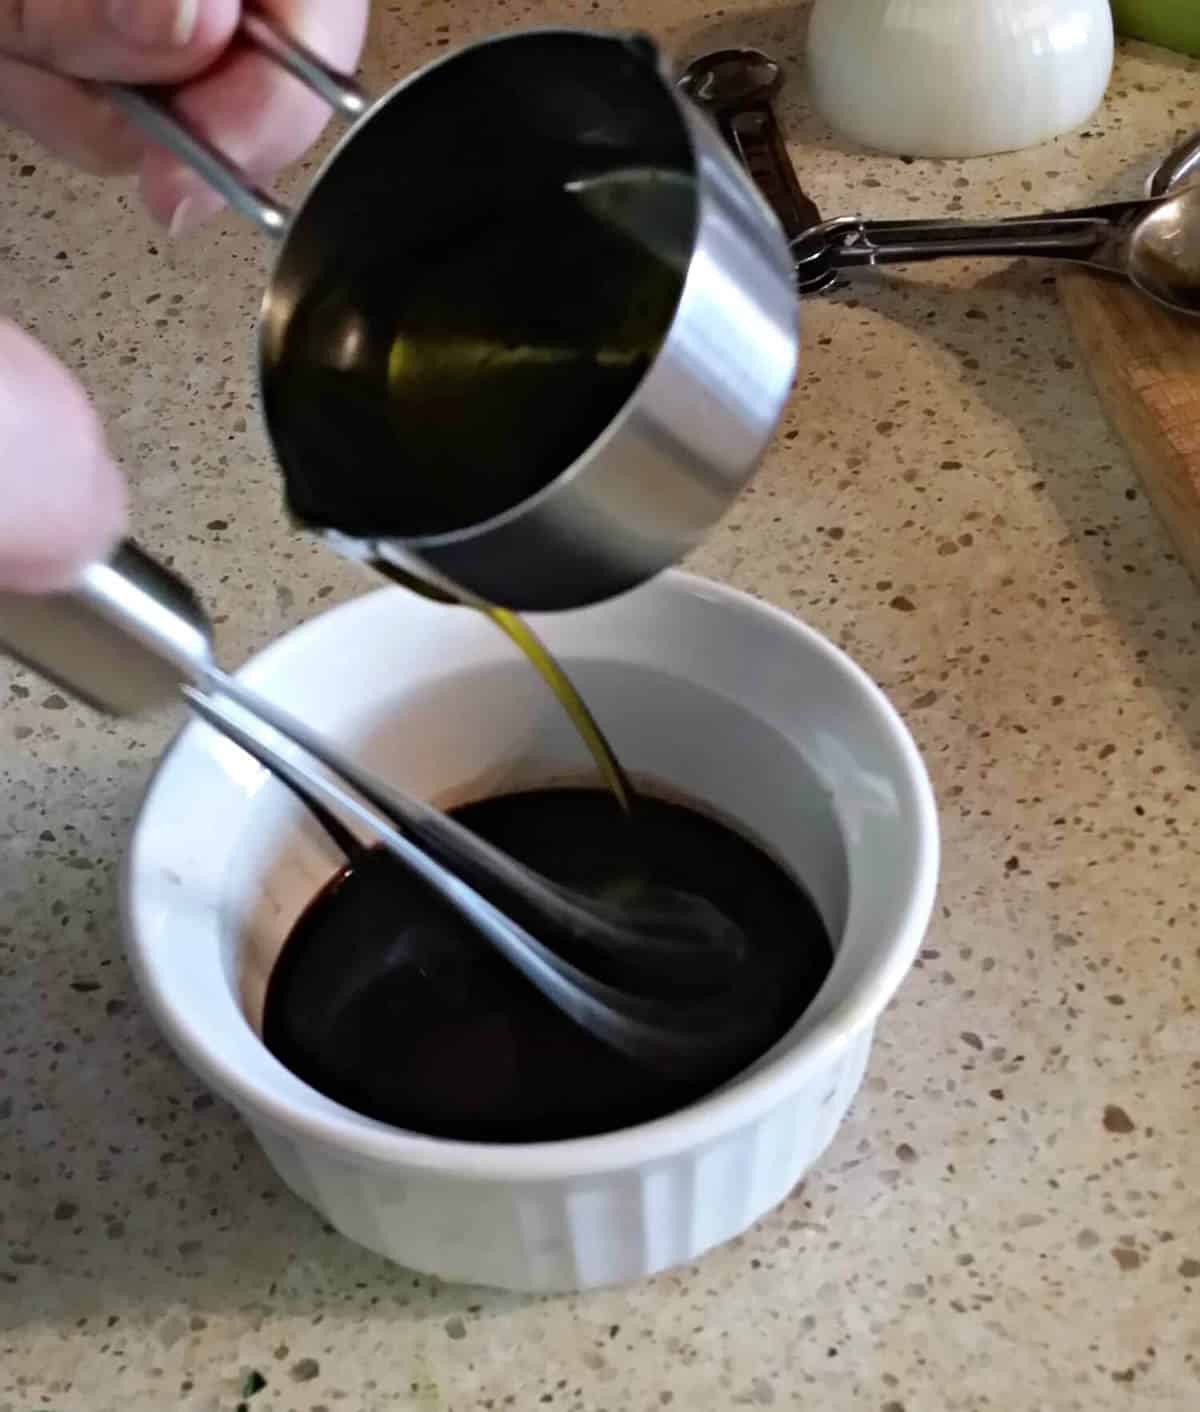 whisking in the olive oil to the vinaigrette for steamed asparagus